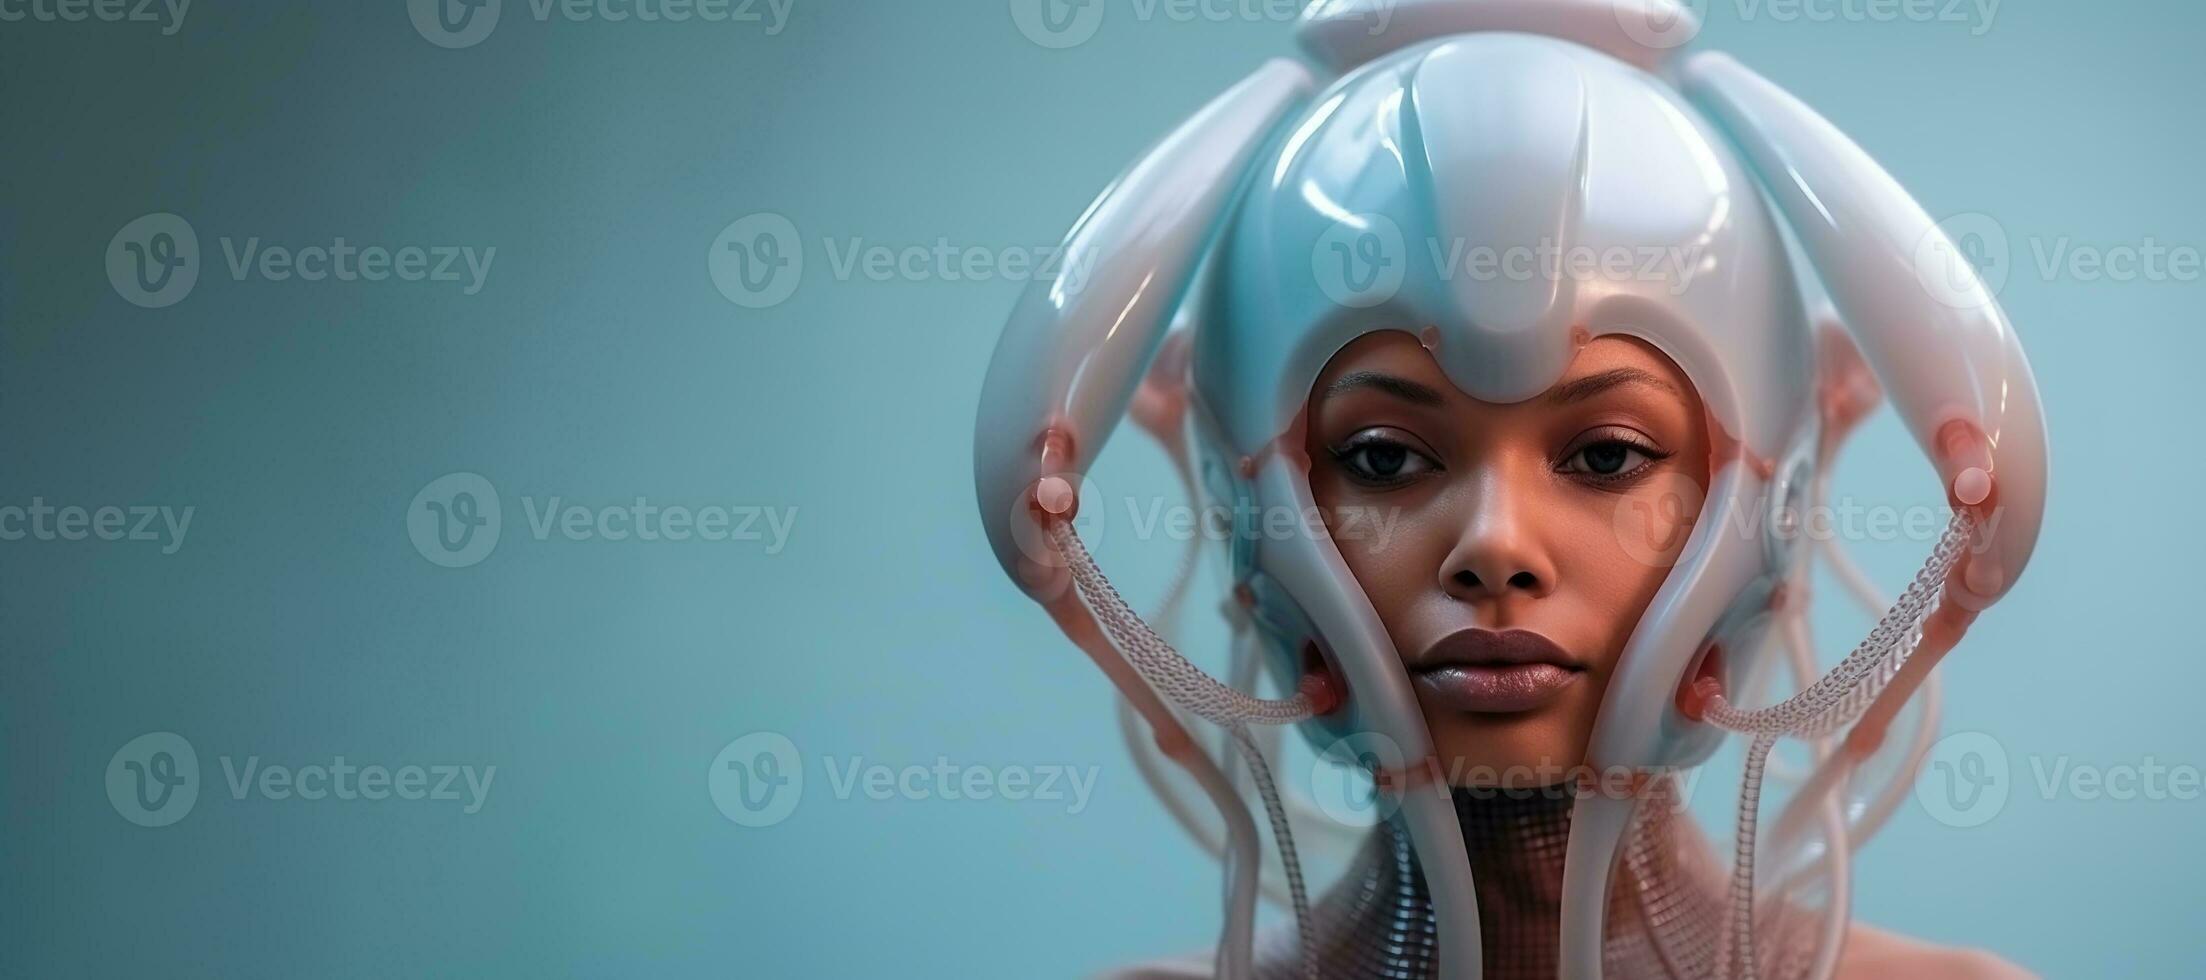 Generative AI, Woman in plastic blue octopus like mask, high tech futurism, minimalist beauty photo